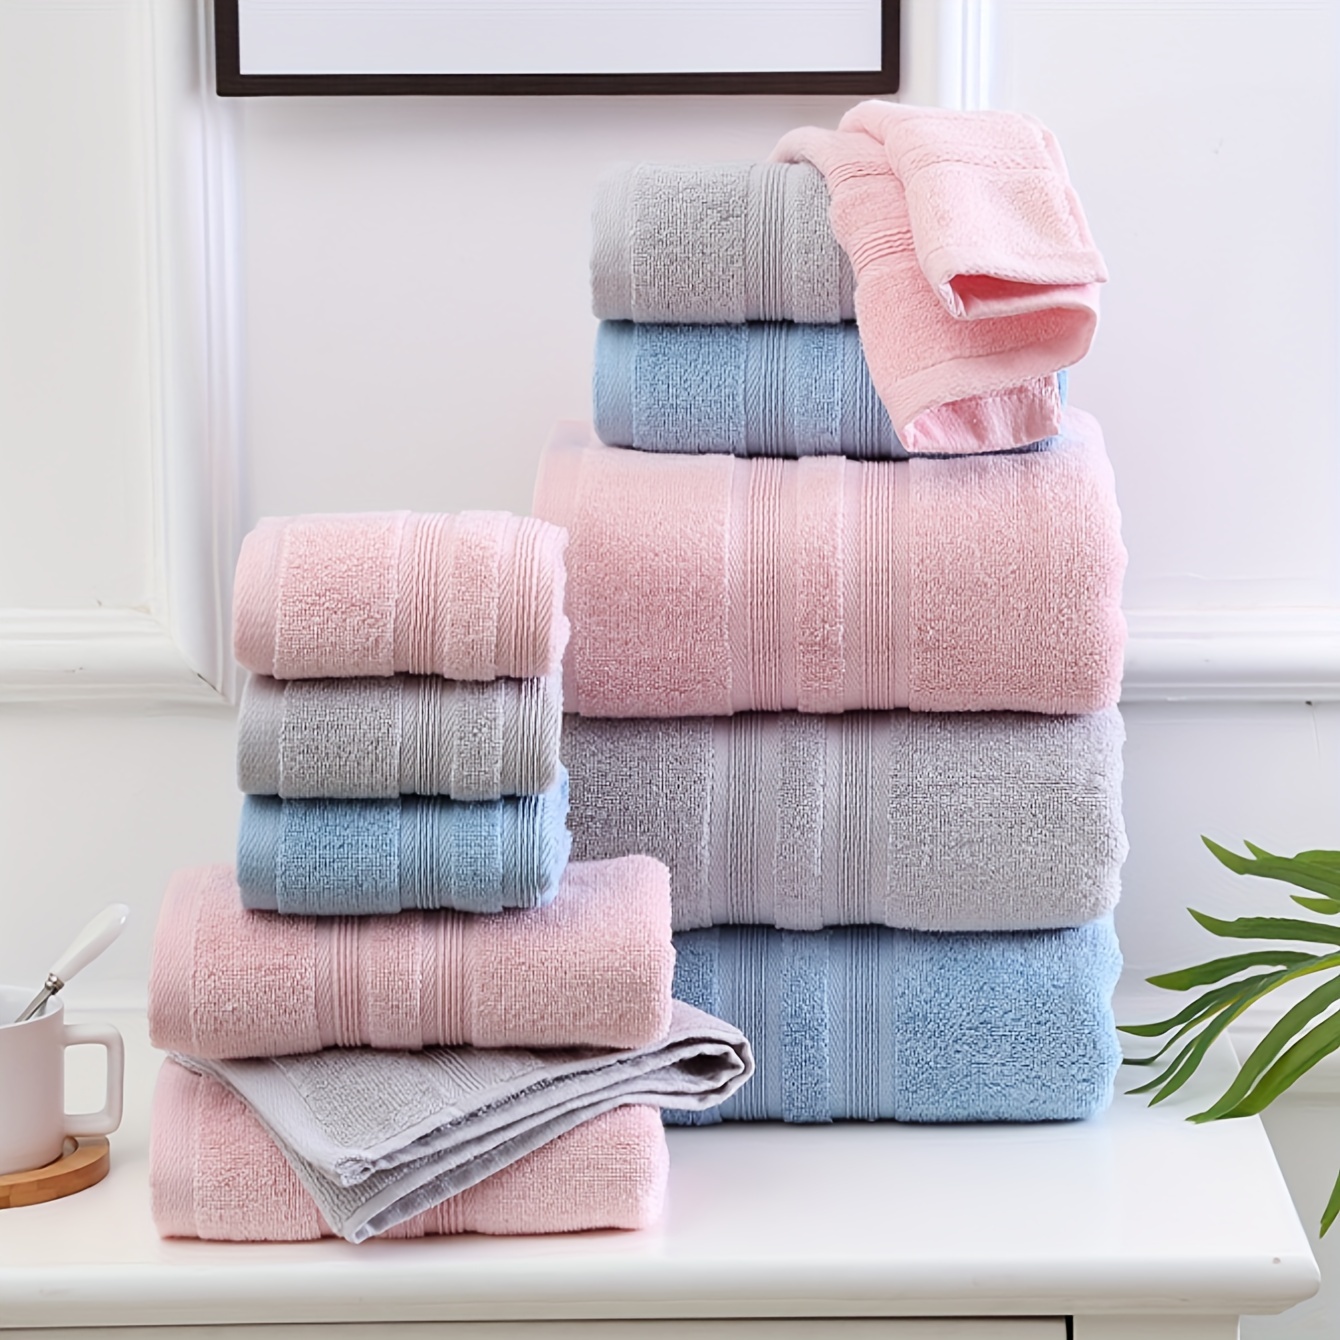 3pcs premium bath linen set 1 square towel 1 bath towel 1 hand towel soft absorbent cotton shower towel set ideal for both men and women bathroom supplies home supplies